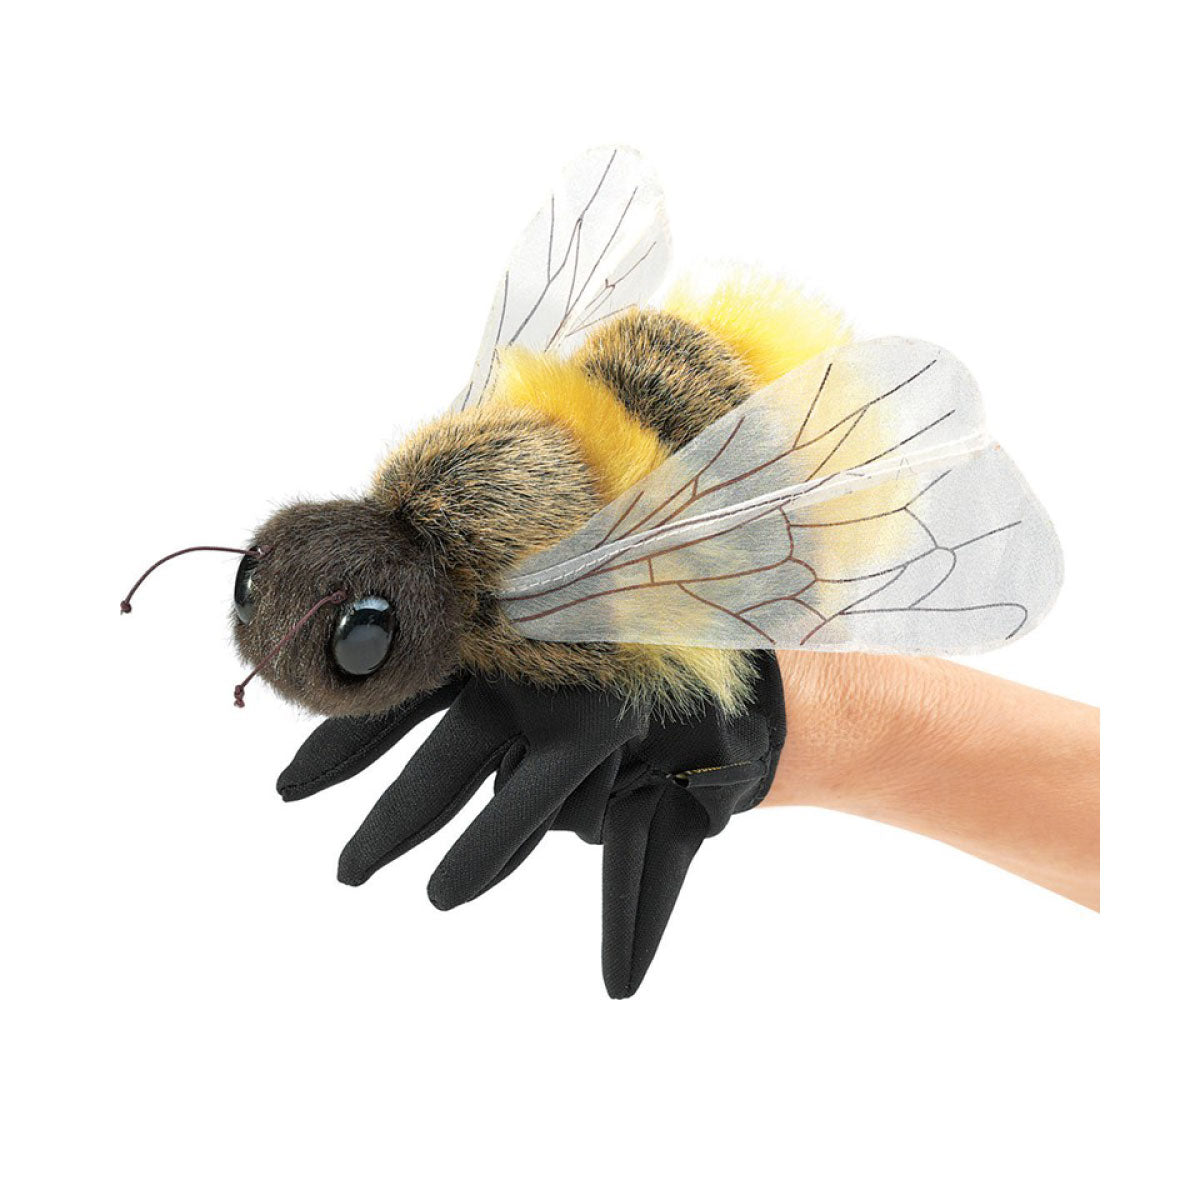 Honeybee Puppet from Folkmanis